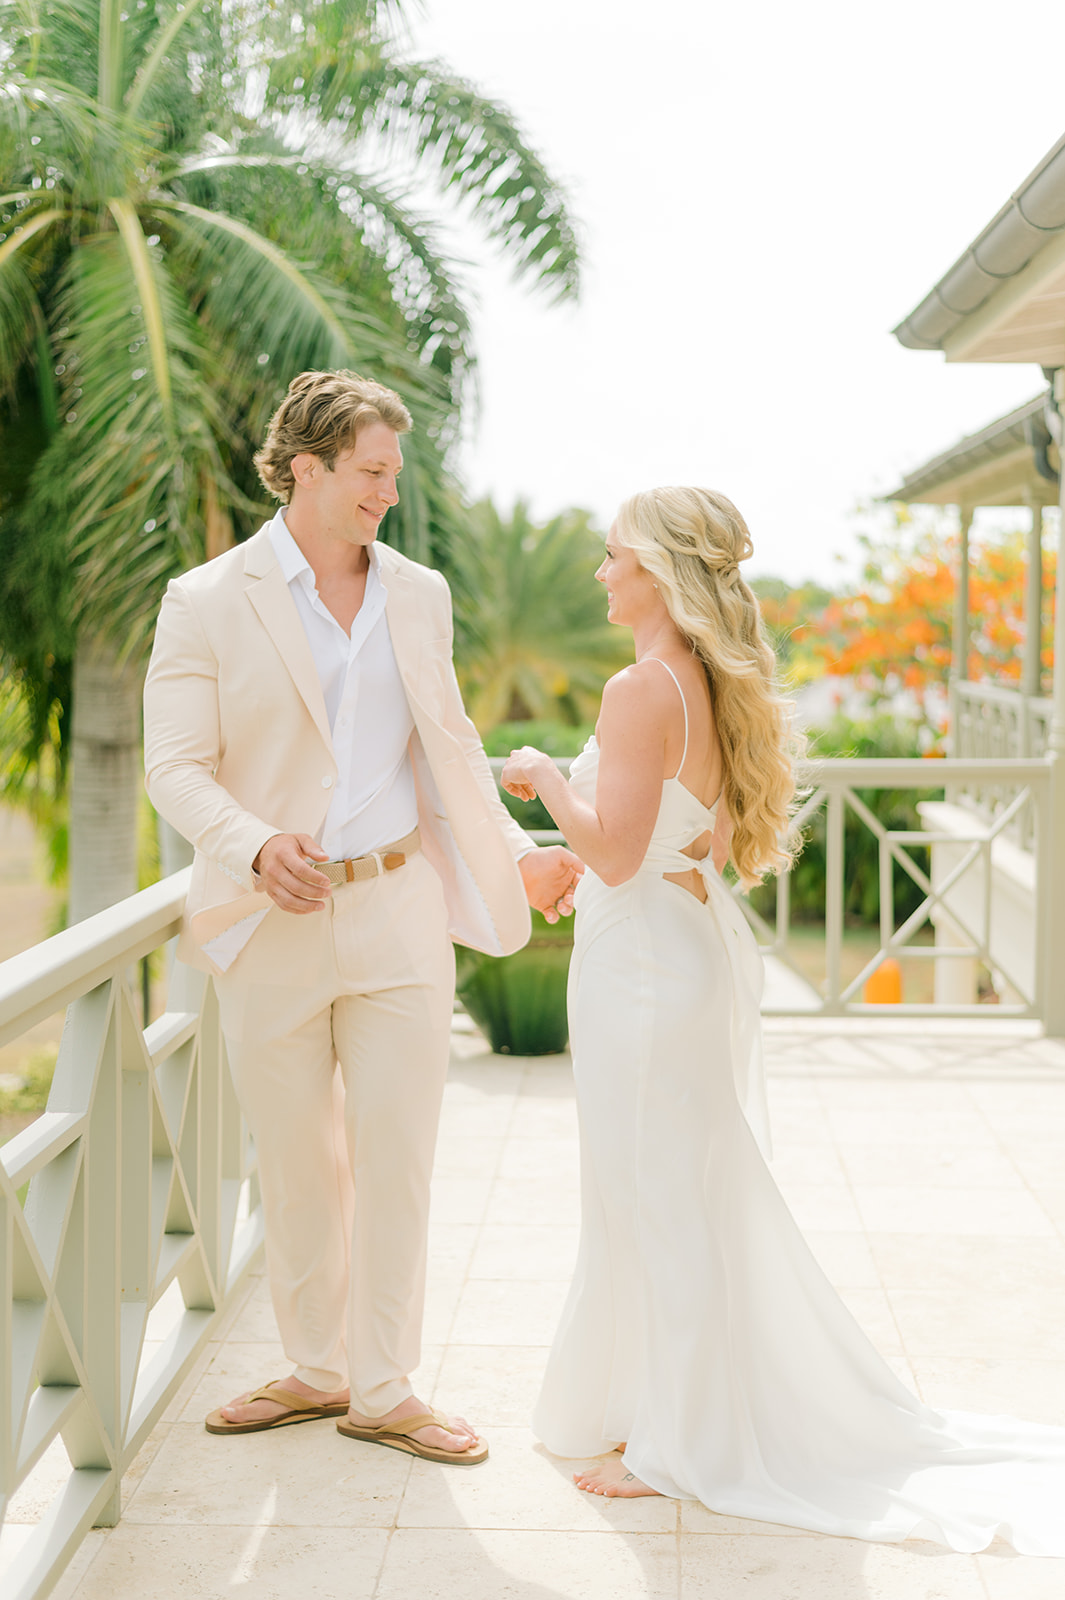 Elegant wedding photography at Antigua's luxurious resorts
